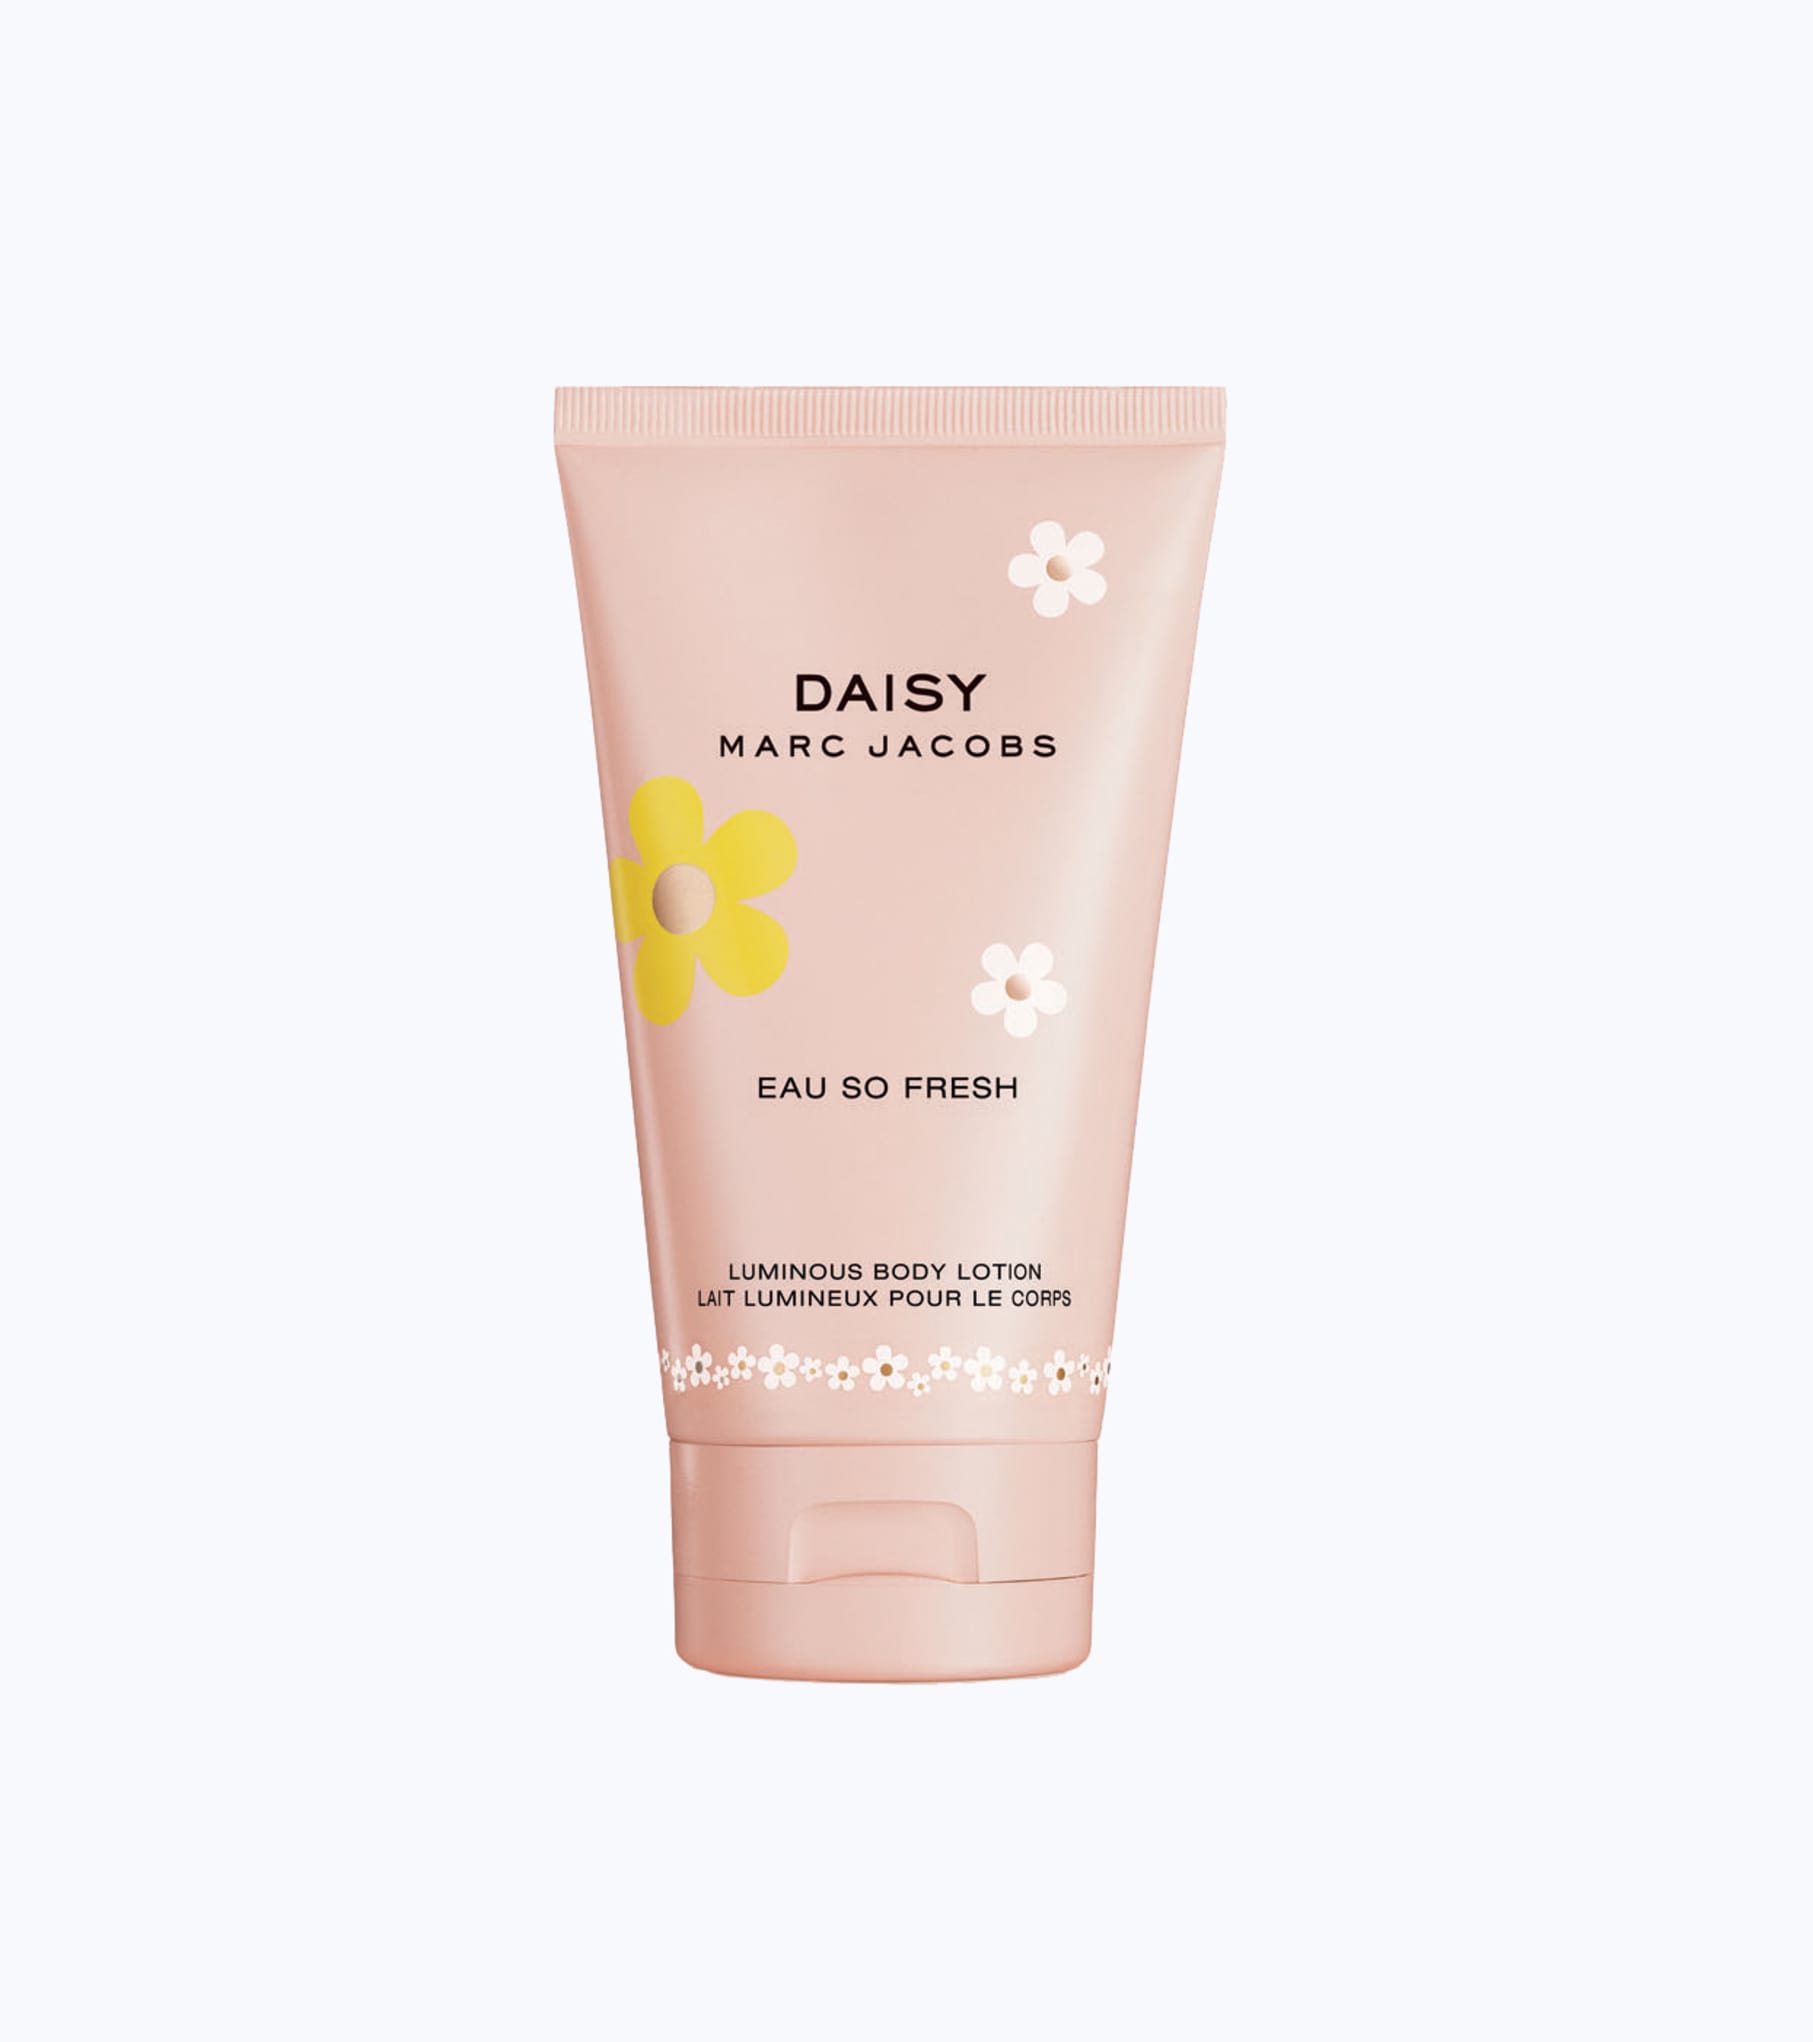 Daisy Eau So Fresh by Marc Jacobs 4.2 oz Eau de Toilette Spray for Women.  New Tester